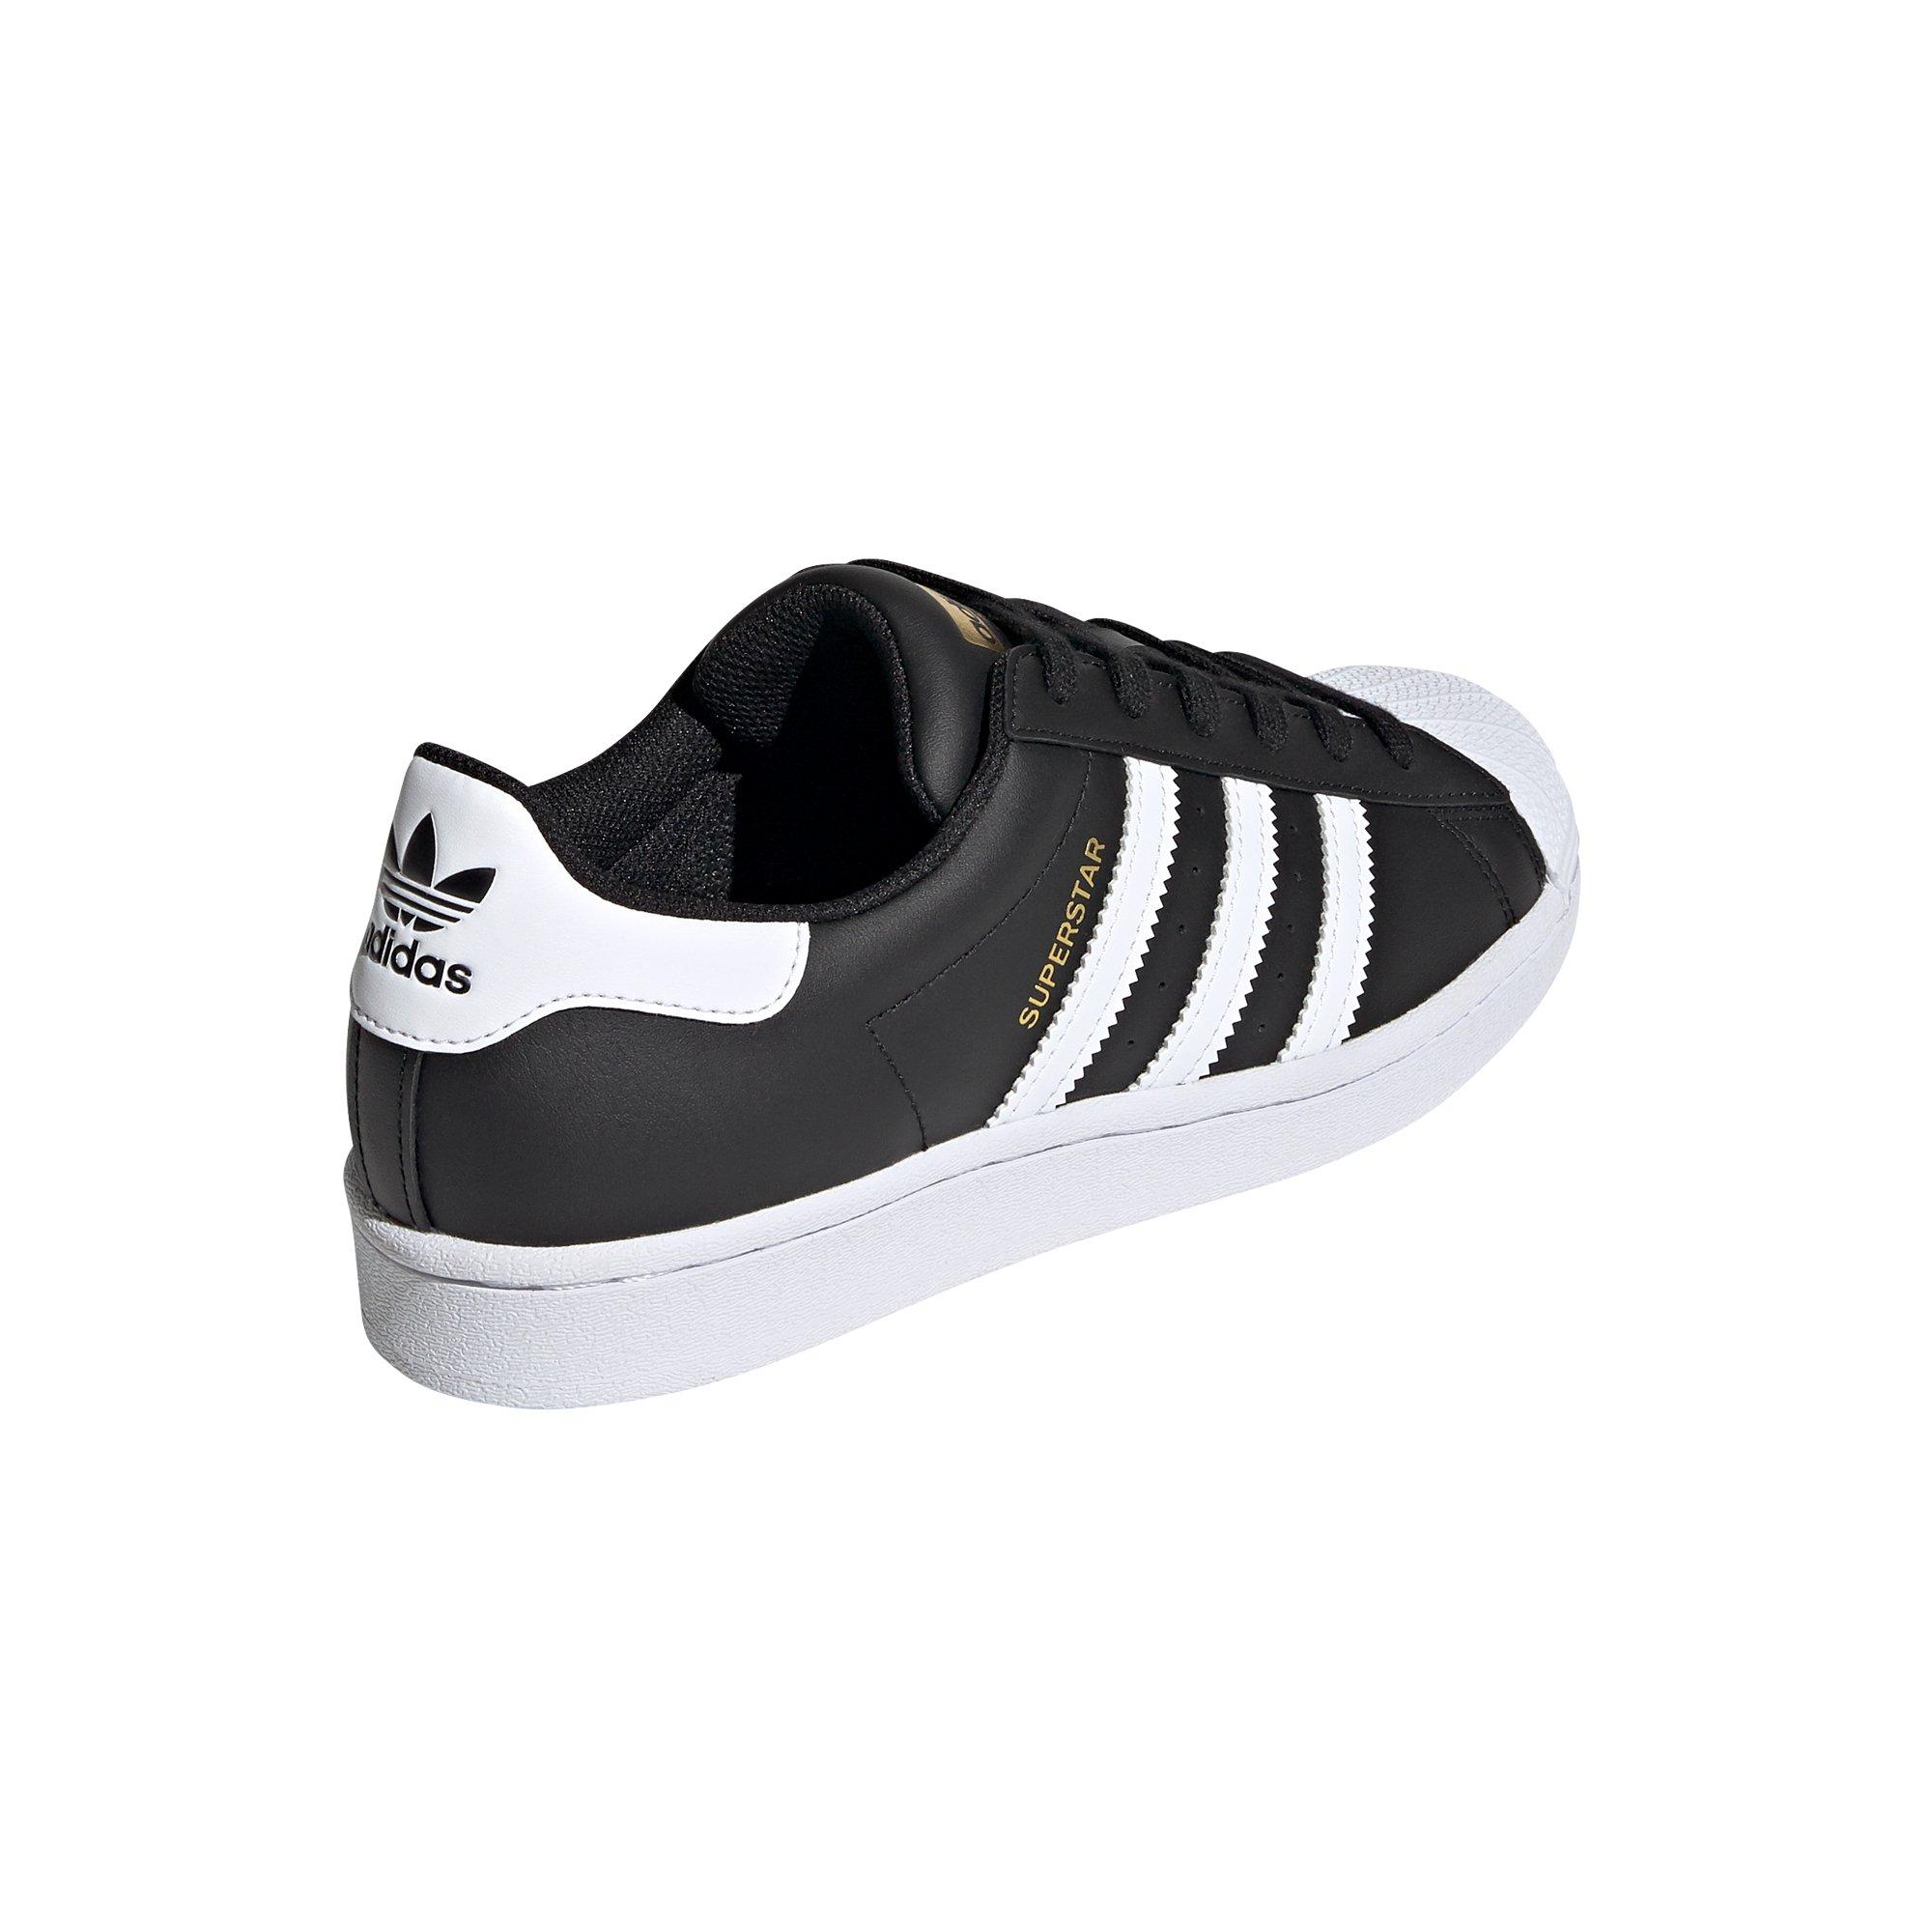 Adidas Originals Women's Superstar Shoes, Size 6.5, Black/White